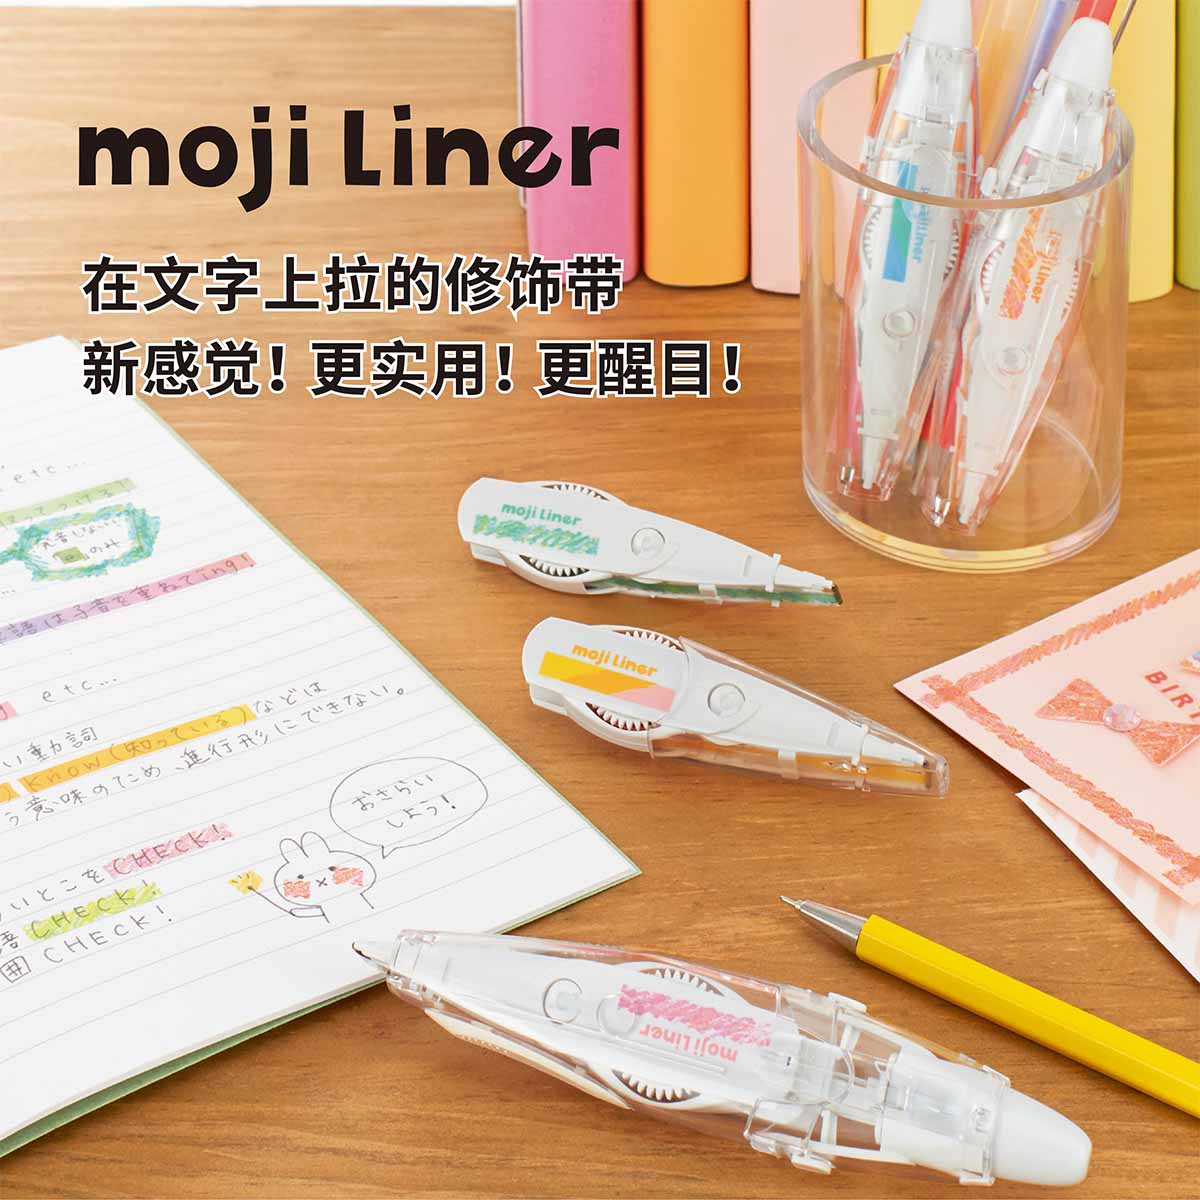 moji Liner 修饰带